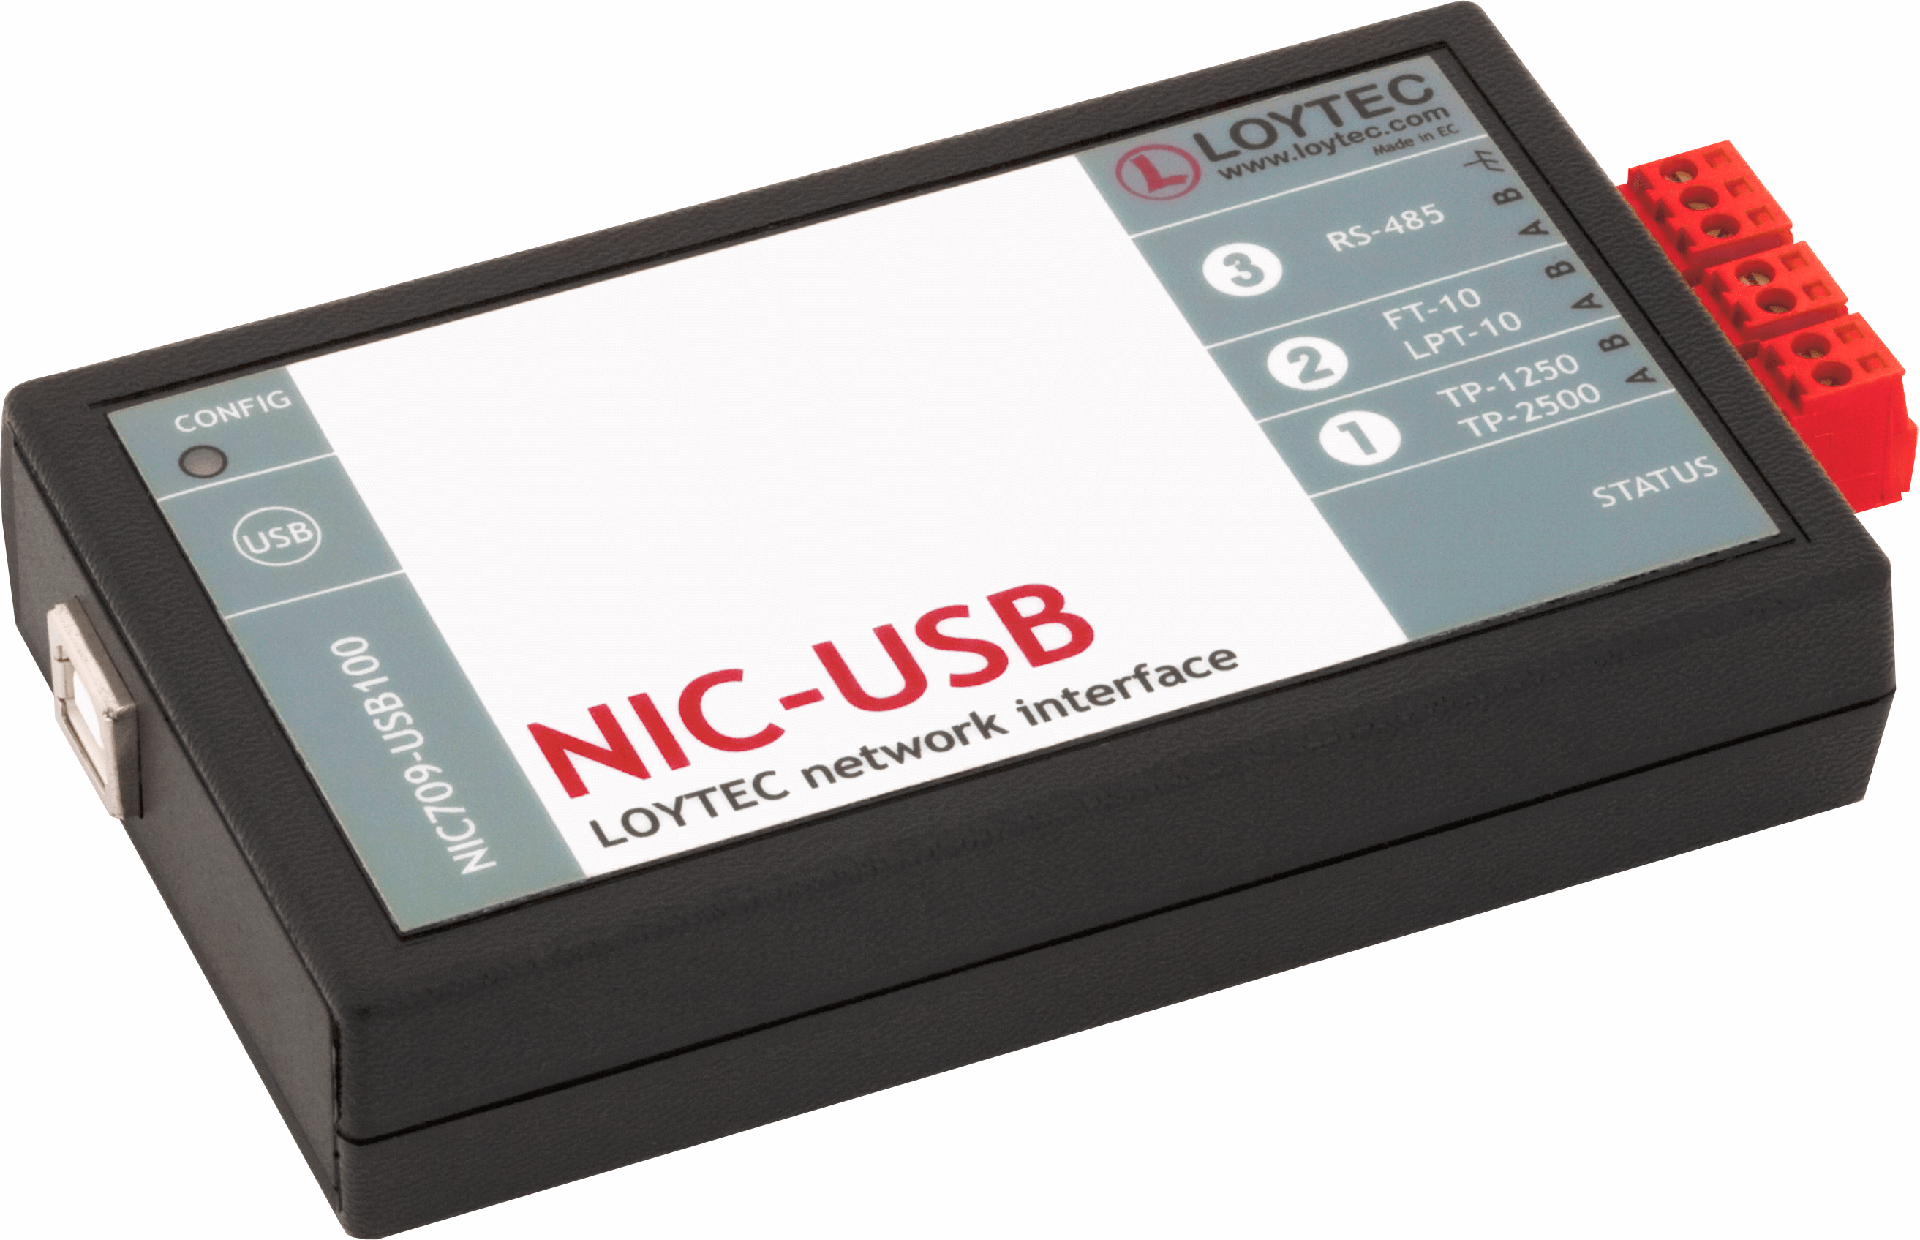 NIC709_USB100_4e8eecdff2059.jpg